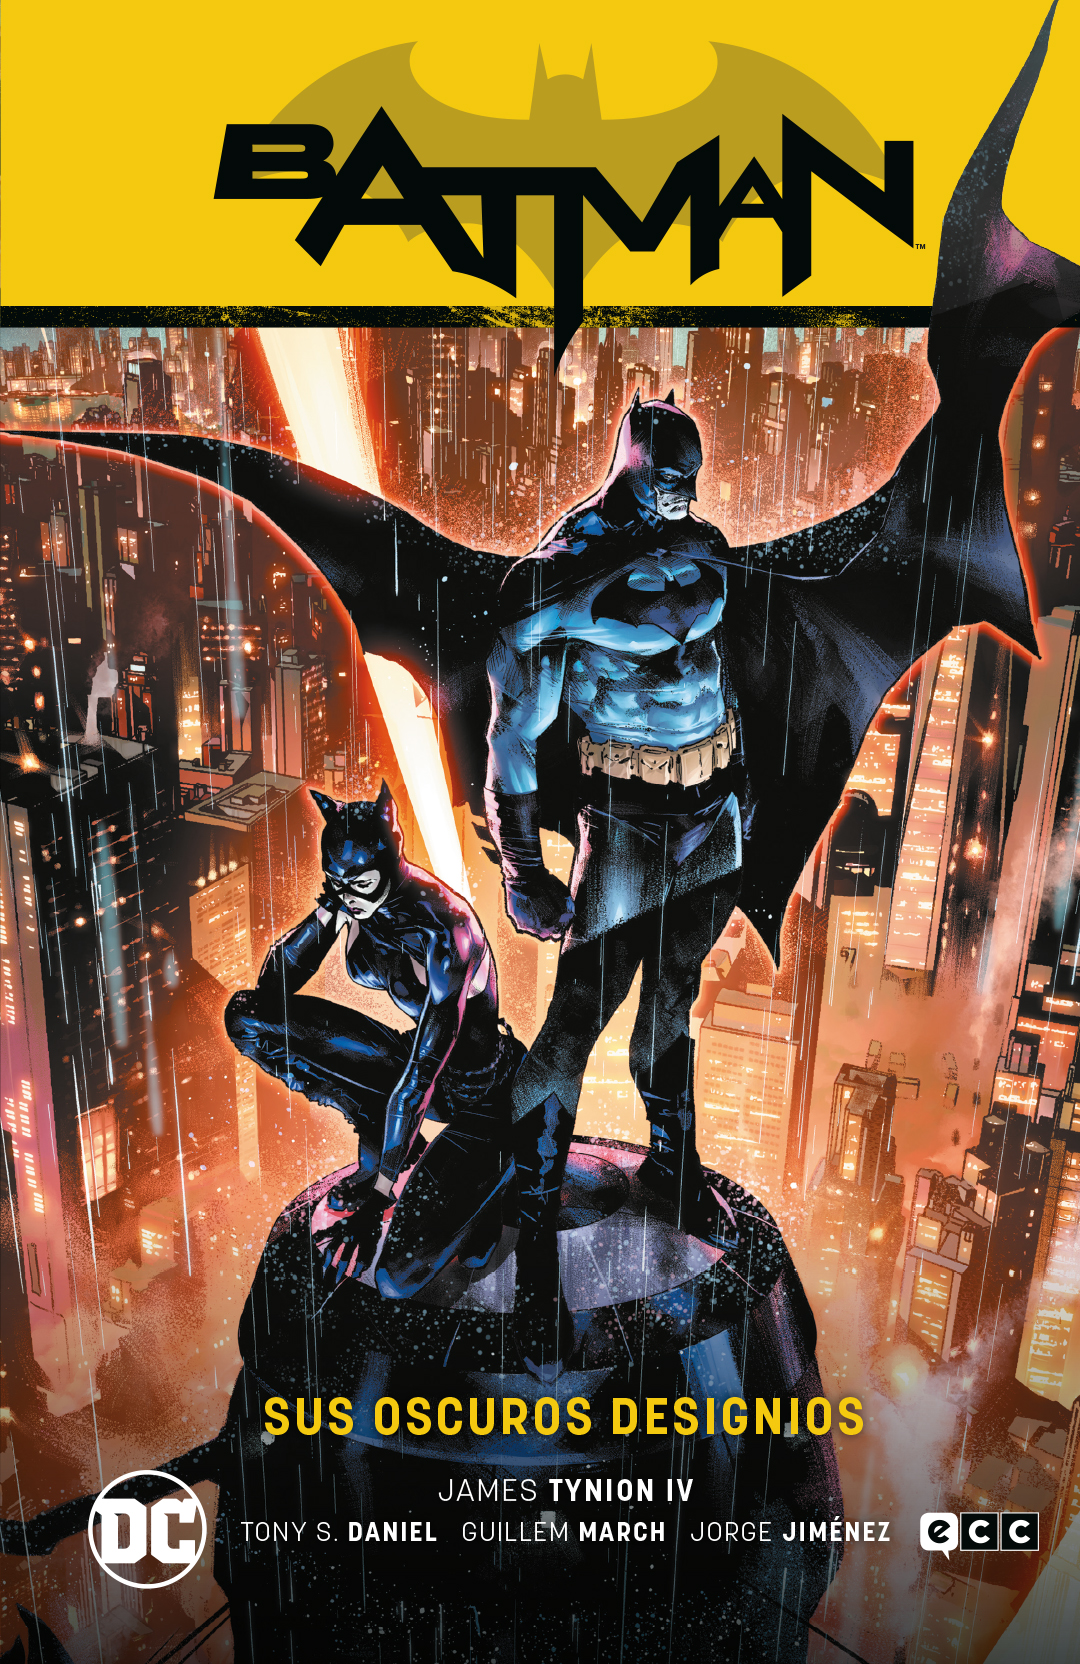 BATMAN Vol.01: SUS OSCUROS DESIGNIOS (BATMAN SAGA – ESTADO DE MIEDO PARTE 1)